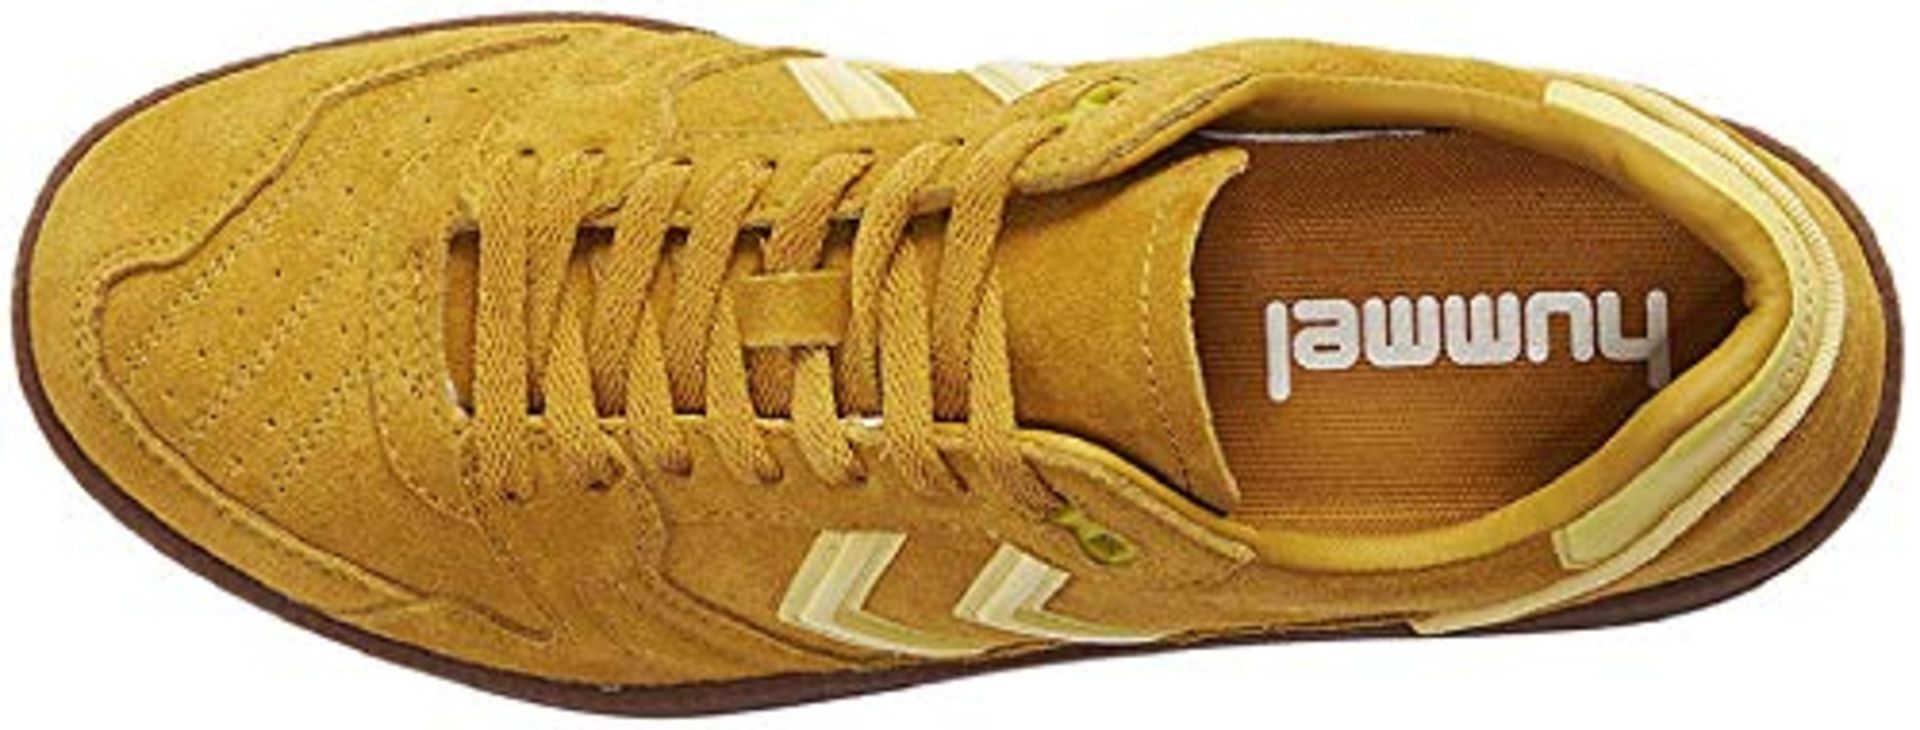 1 x hummel Team Shoes Yellow HB, Sunflower, 44 (EU) 201937_5282 Size: 44 EU | EAN: 5700494865844 - Image 3 of 5